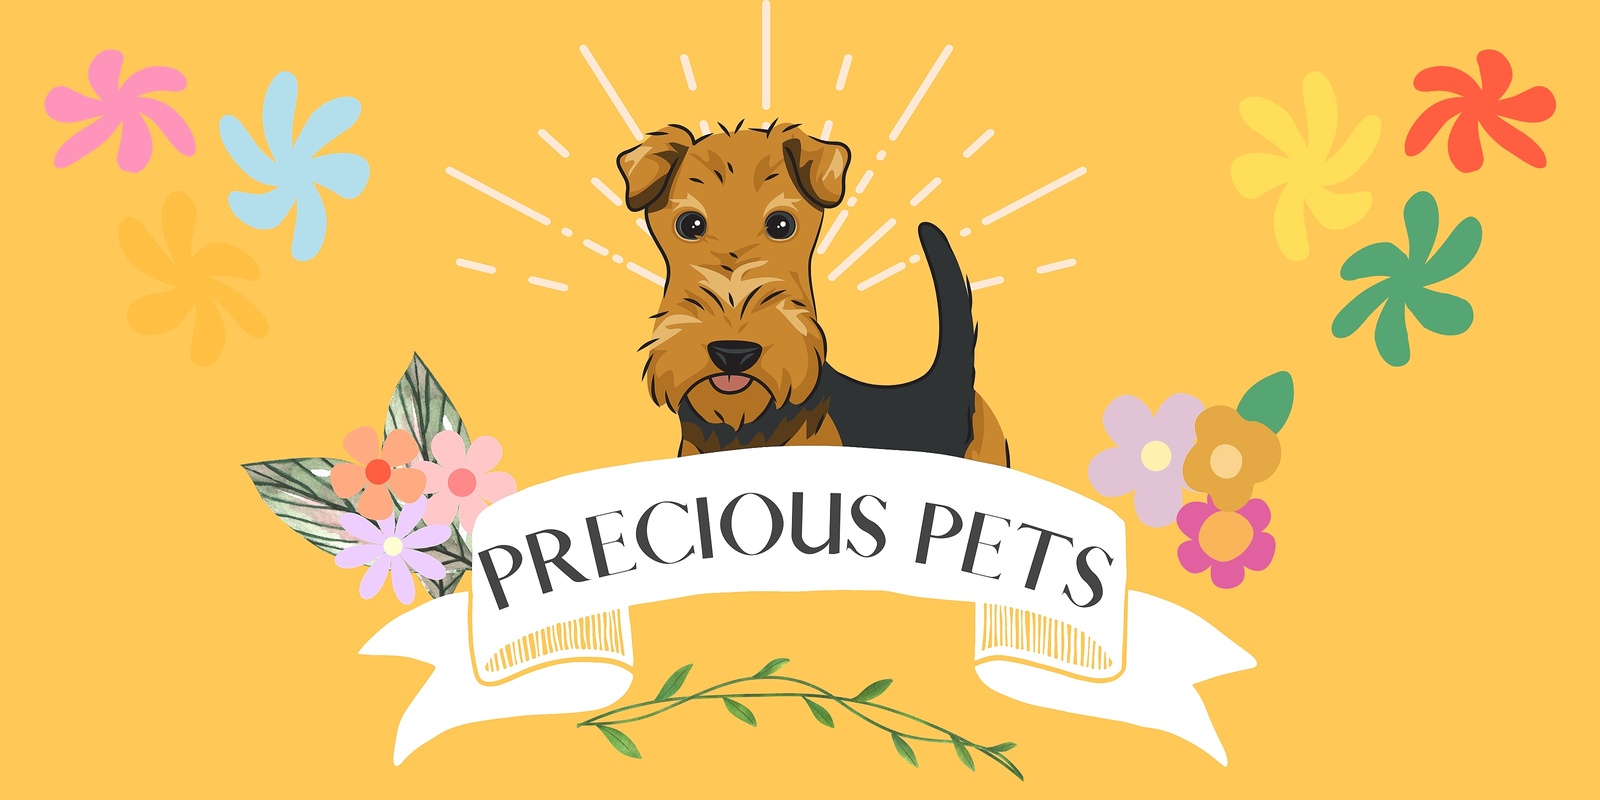 Banner image for Mon 25th - Precious Pets